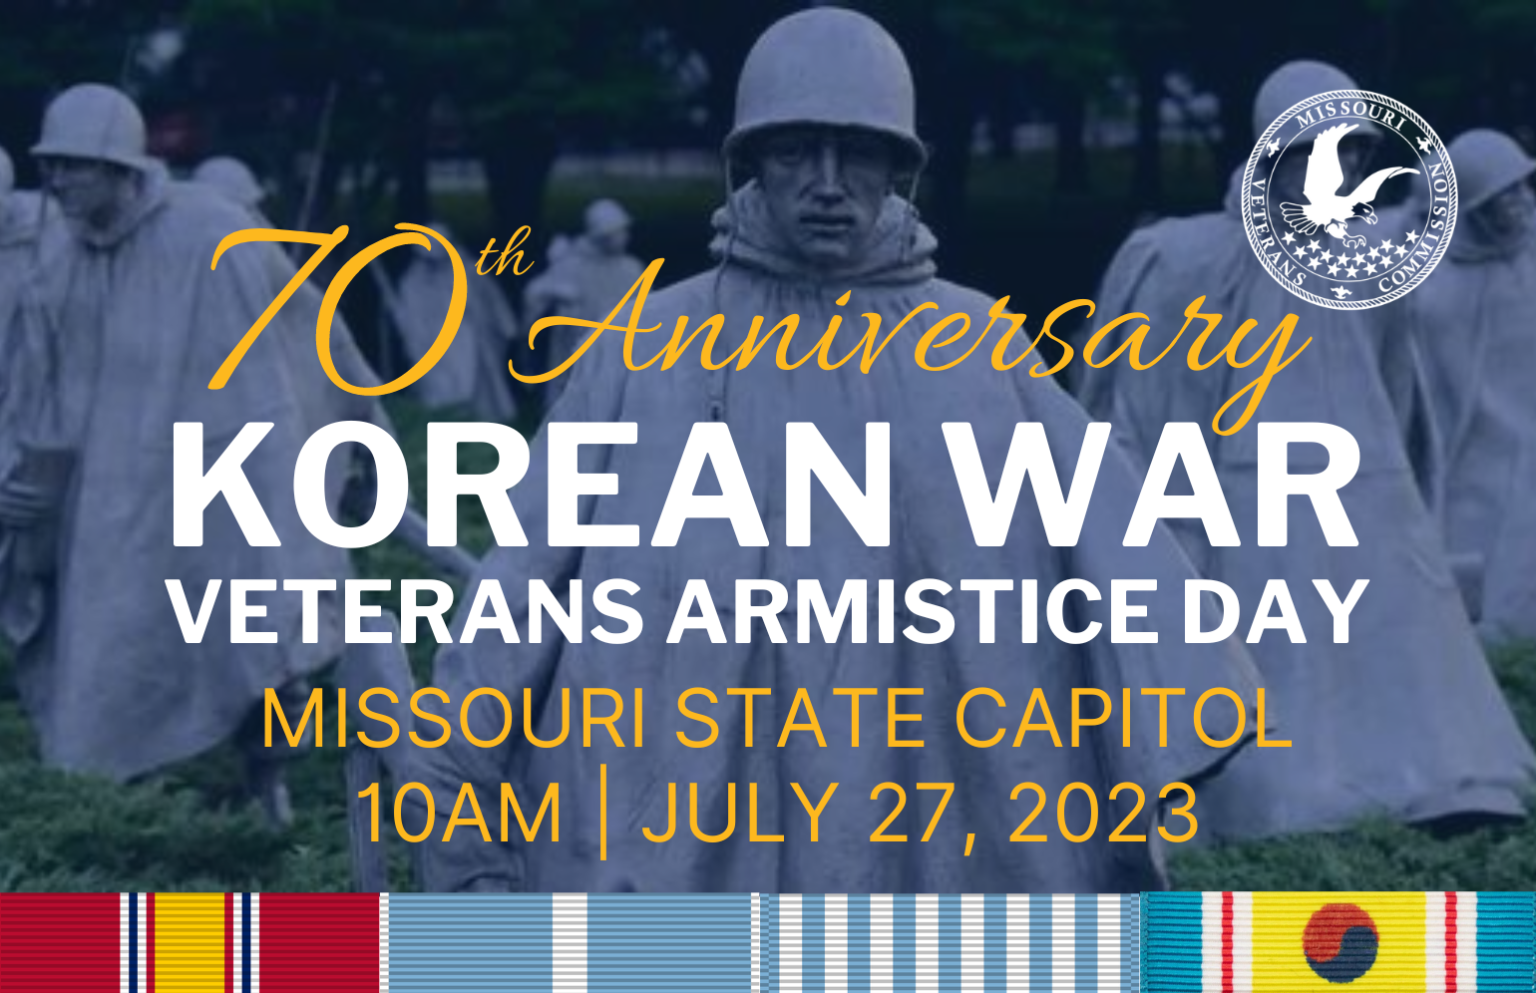 70TH ANNIVERSARY KOREAN WAR VETERANS ARMISTICE DAY EVENT Veterans